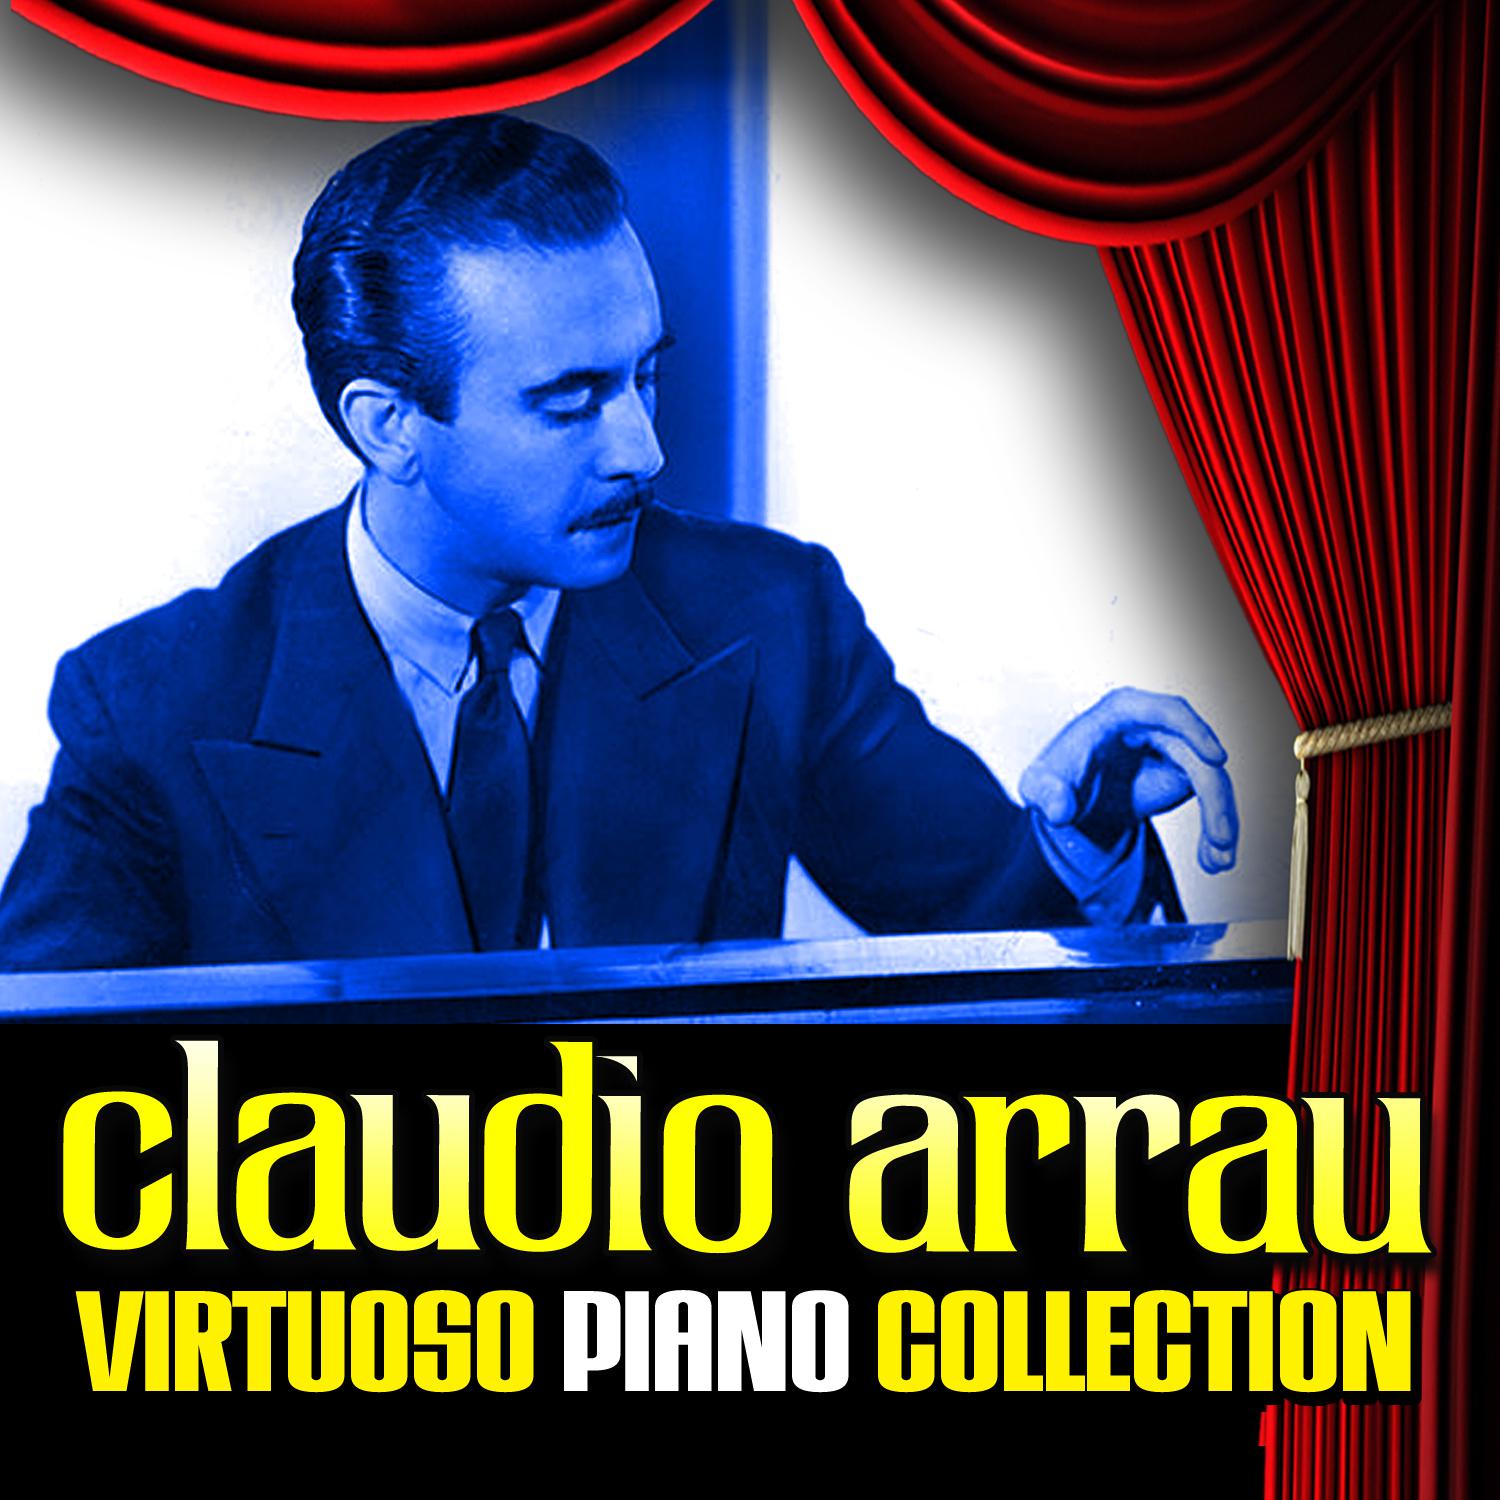 Virtuoso Piano Collection